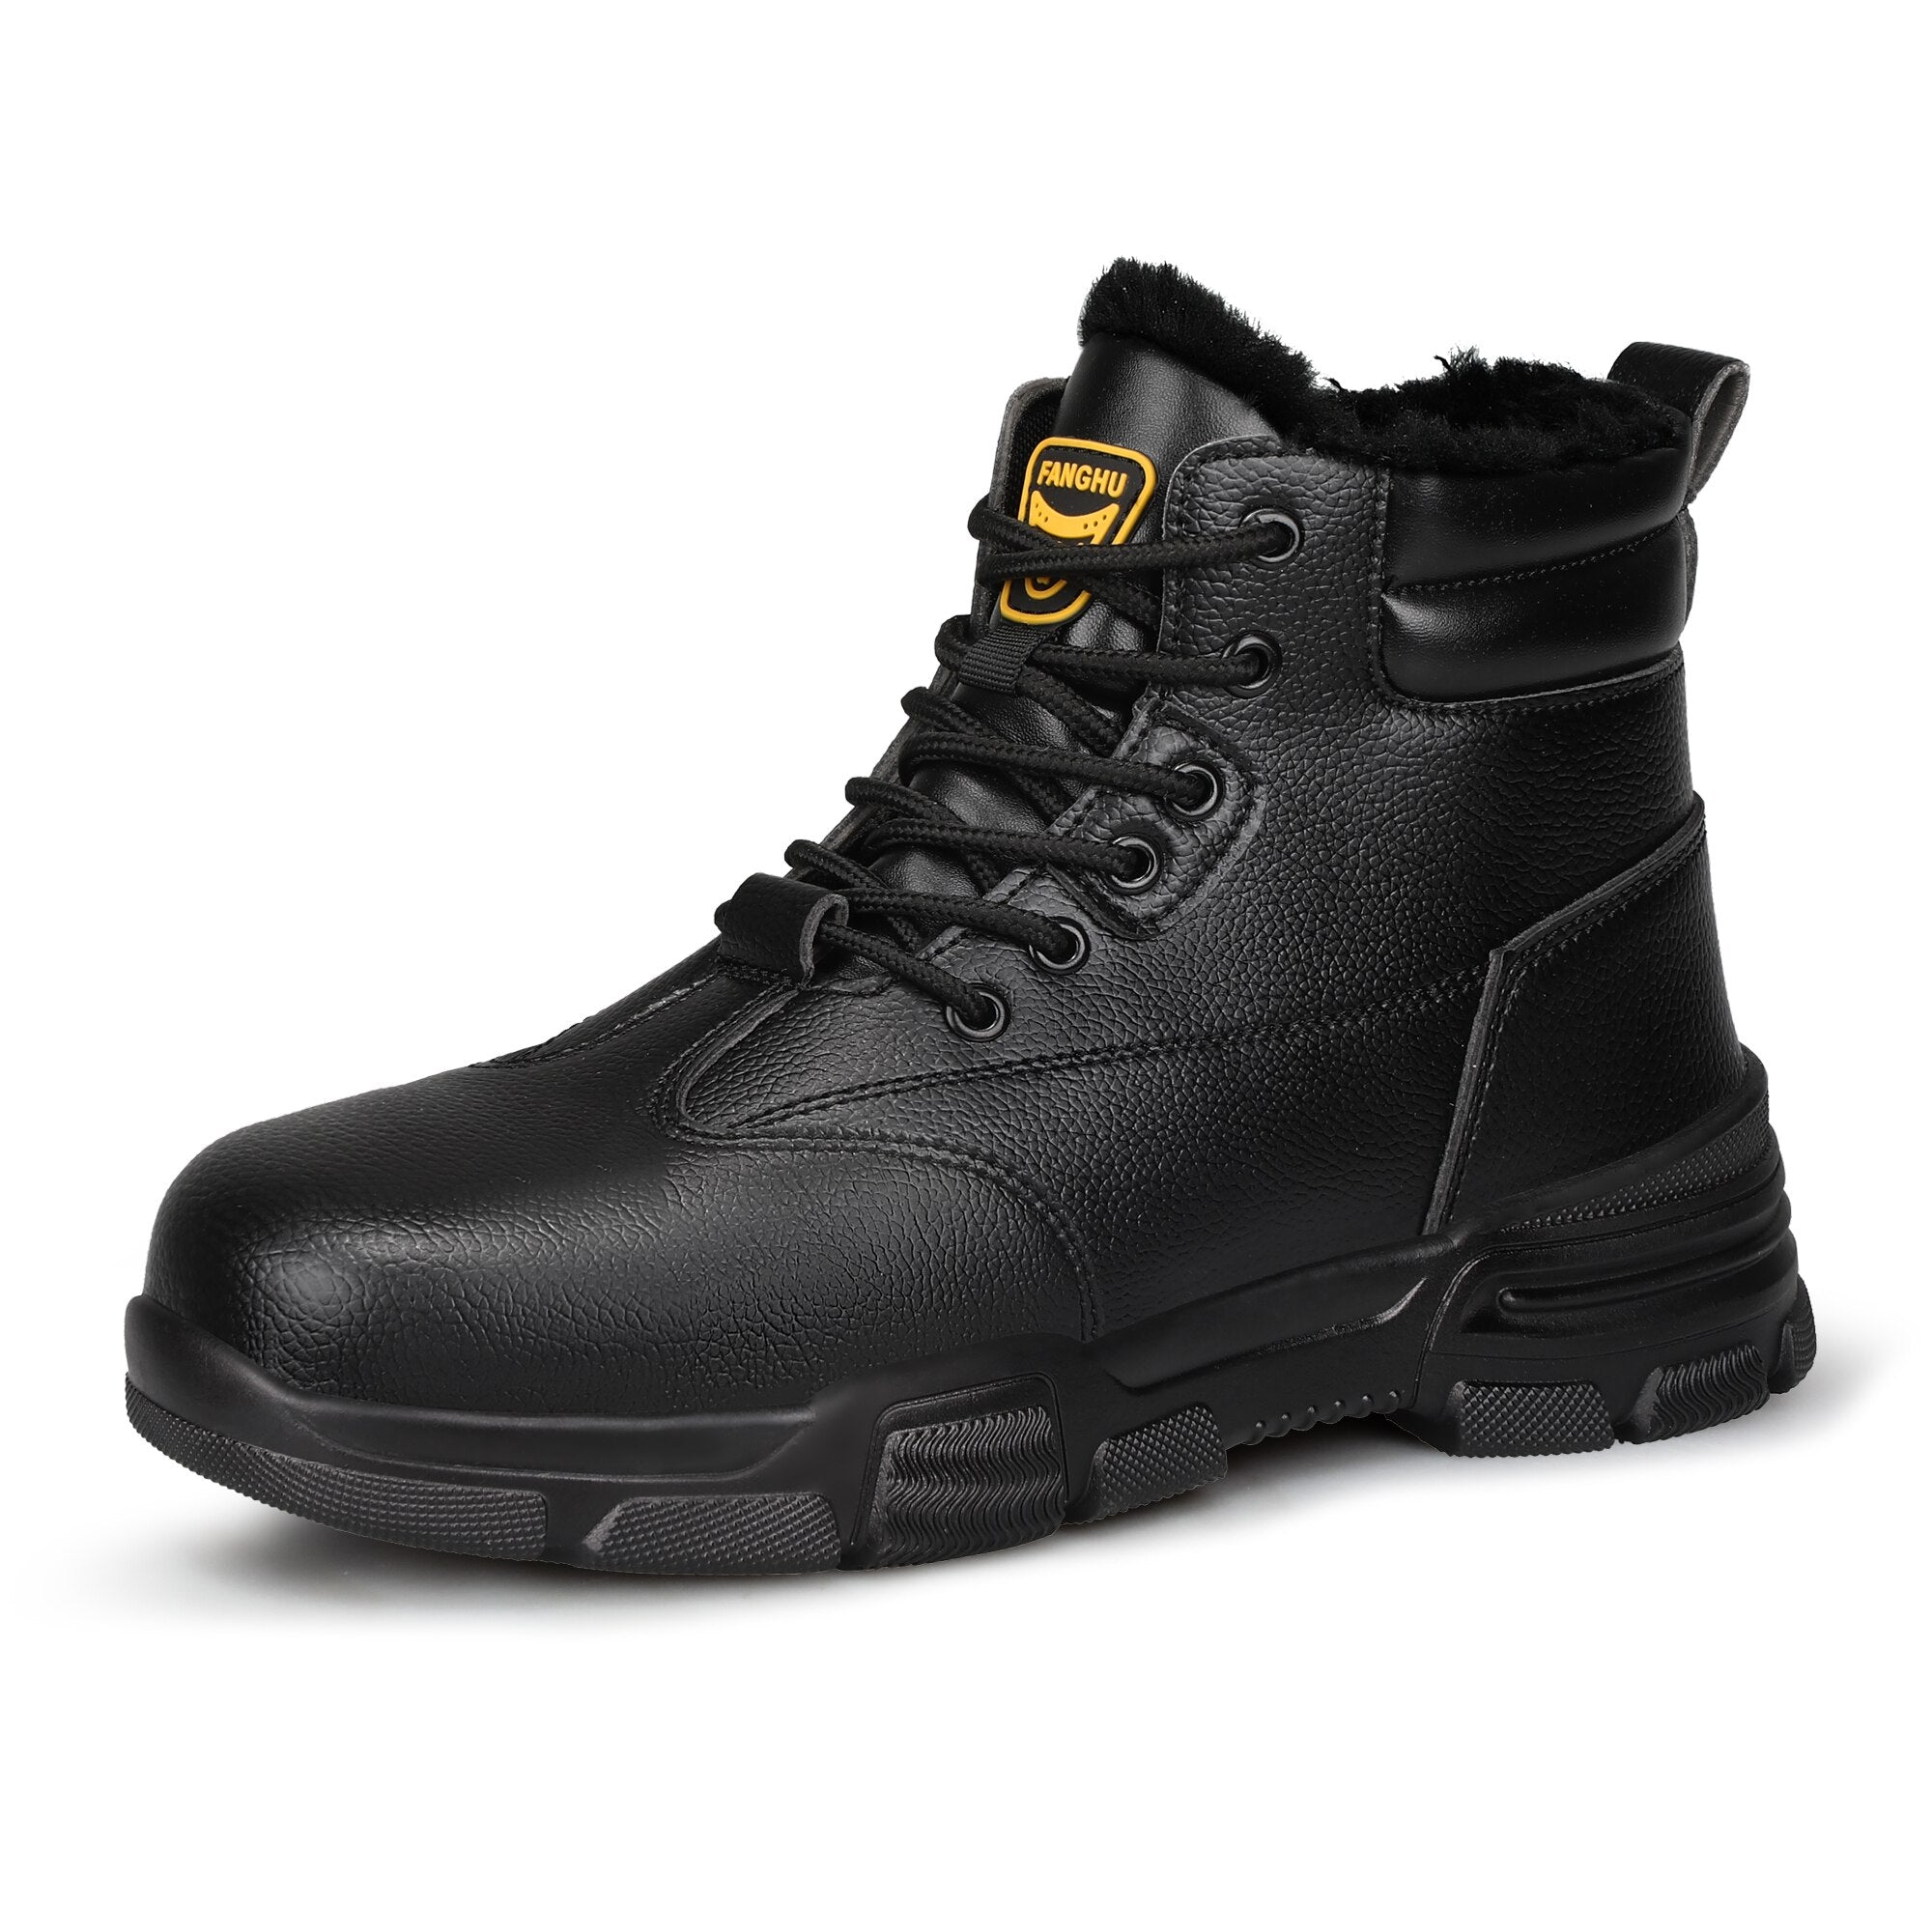 Waterproof Leather Safety Boots For Men Winter Velvet Metal Steel Toe Black Work Boots Indestructible Industrial Welding Boots voguable